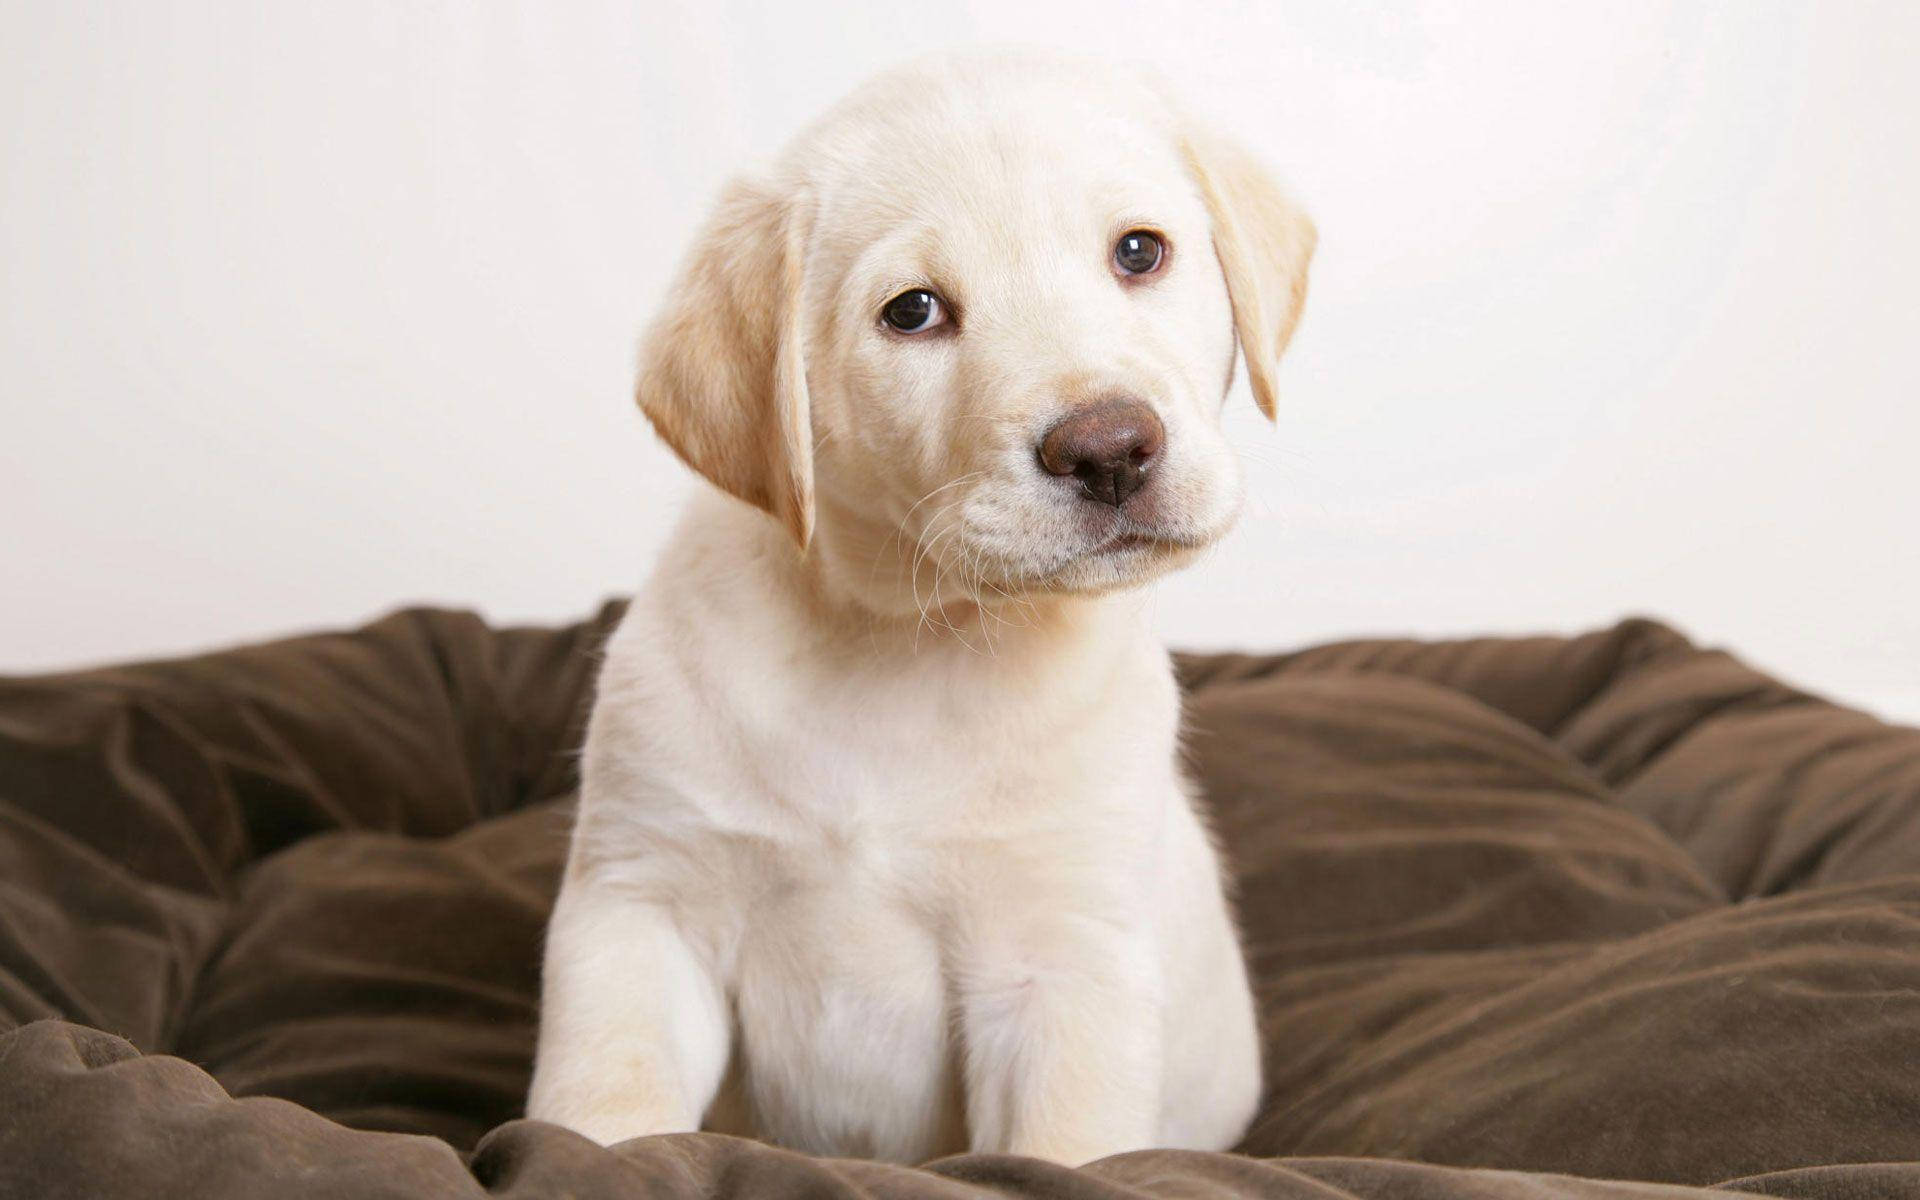 Cute White Puppy On Brown Blanket